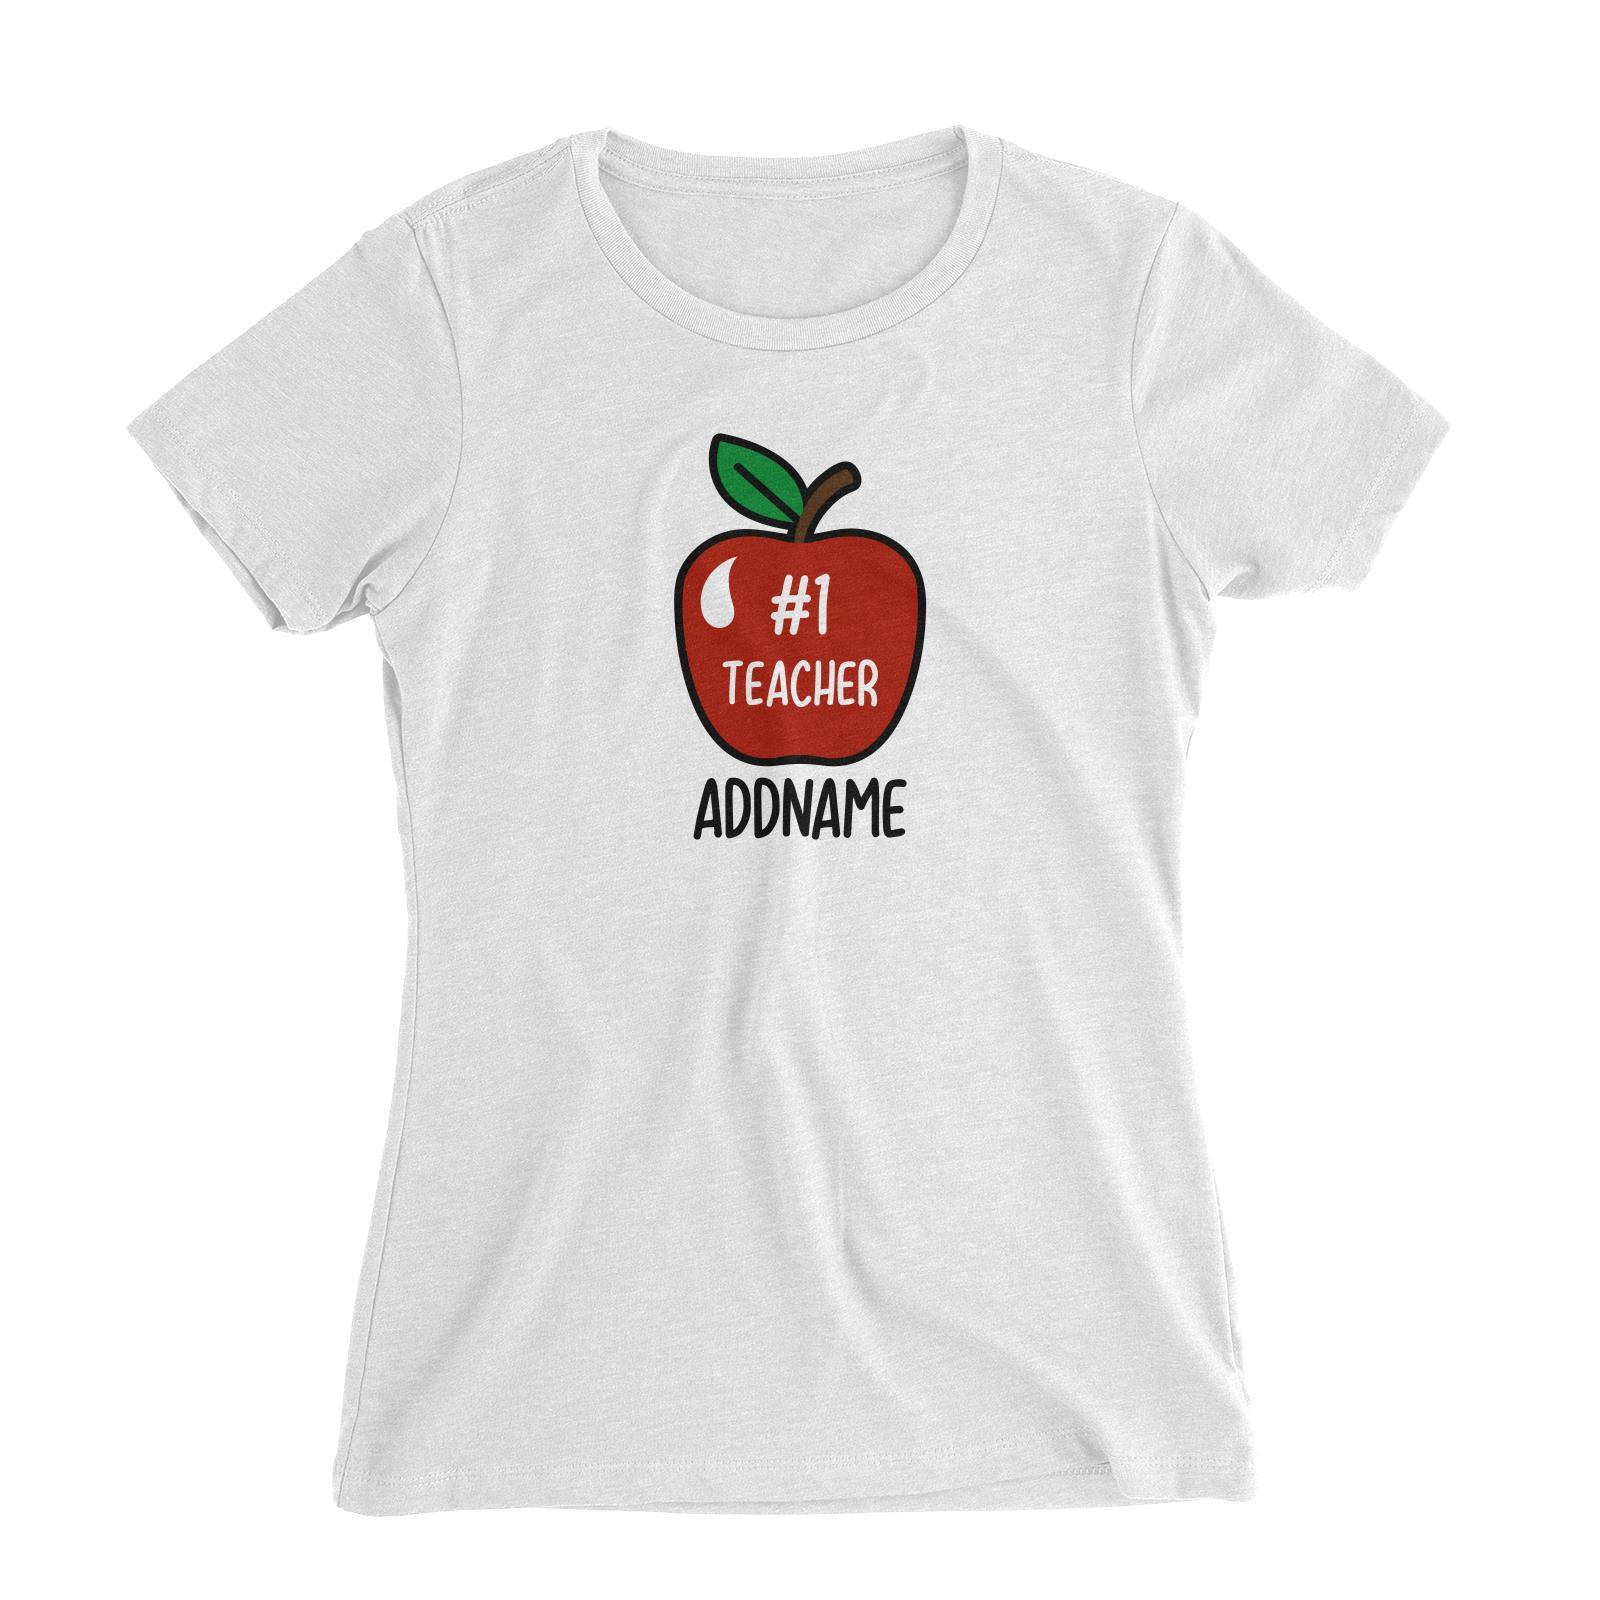 Teacher Addname Big Red Apple Hashtag 1 Teacher Addname Women's Slim Fit T-Shirt